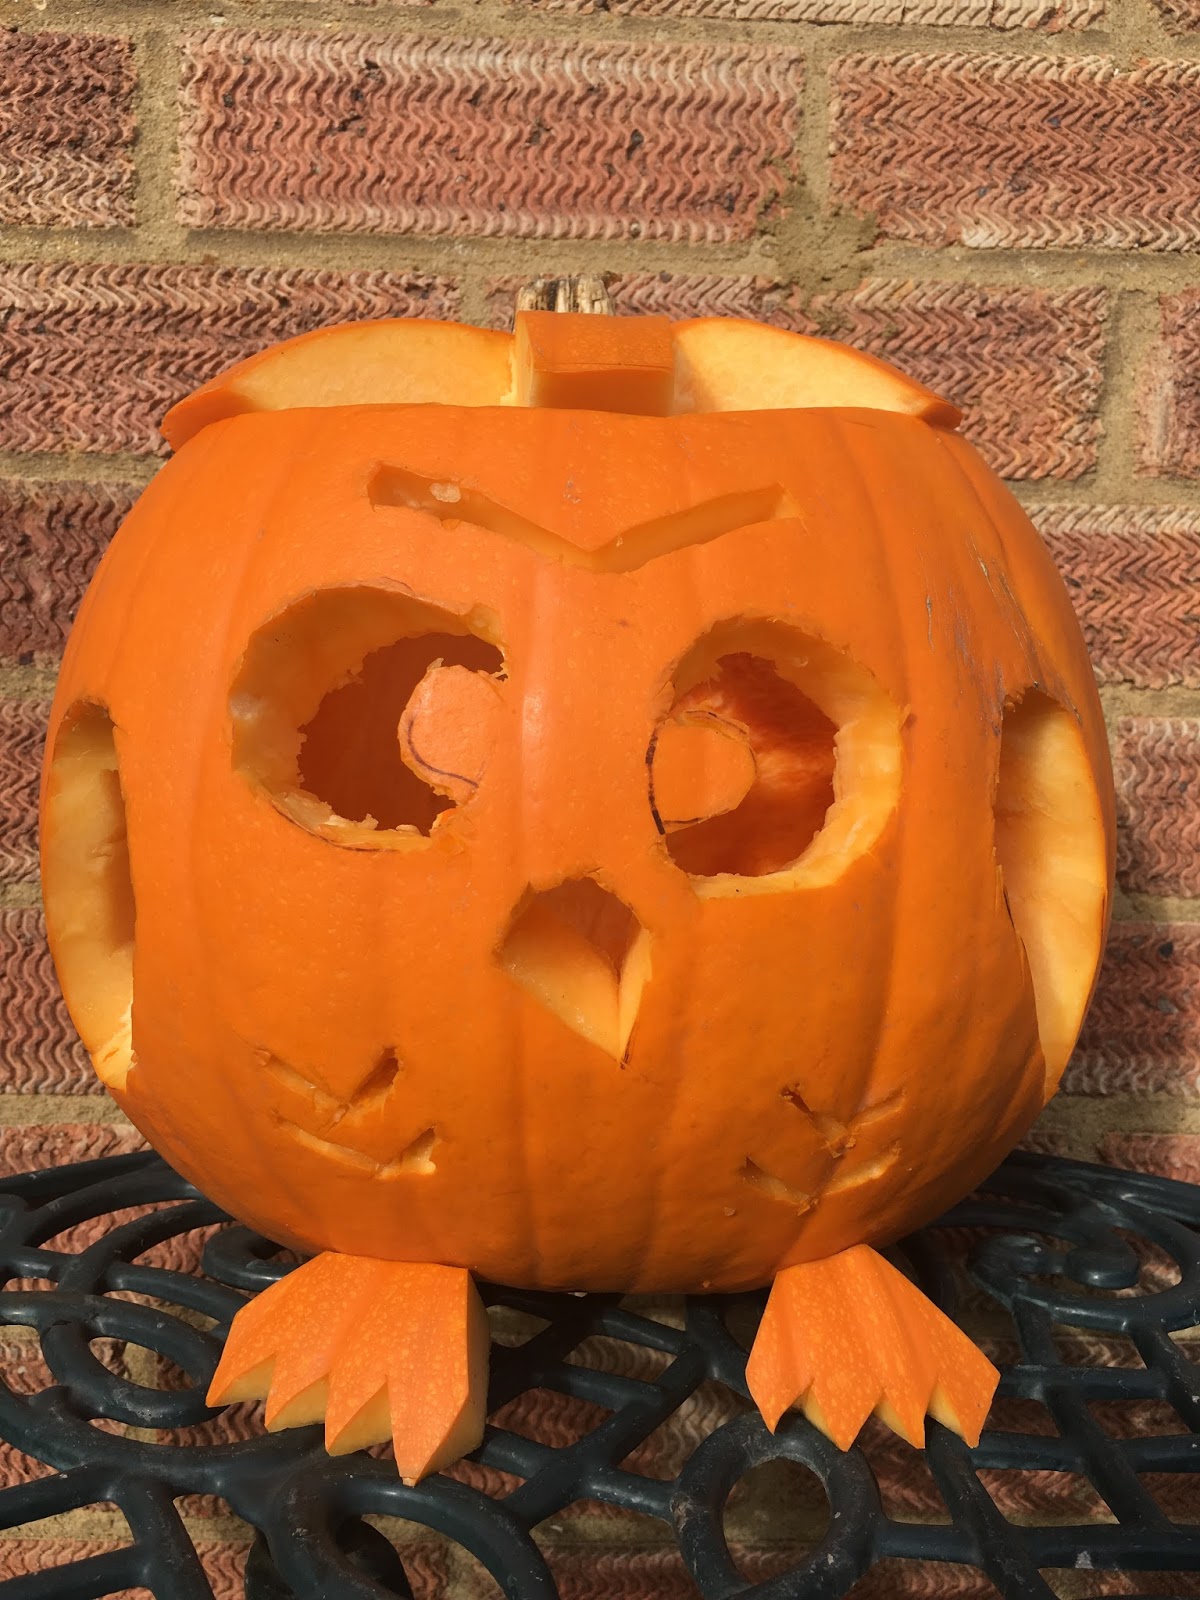 How to Carve a Simple Owl design in a Halloween Pumpkin #myfamiliespumpkin